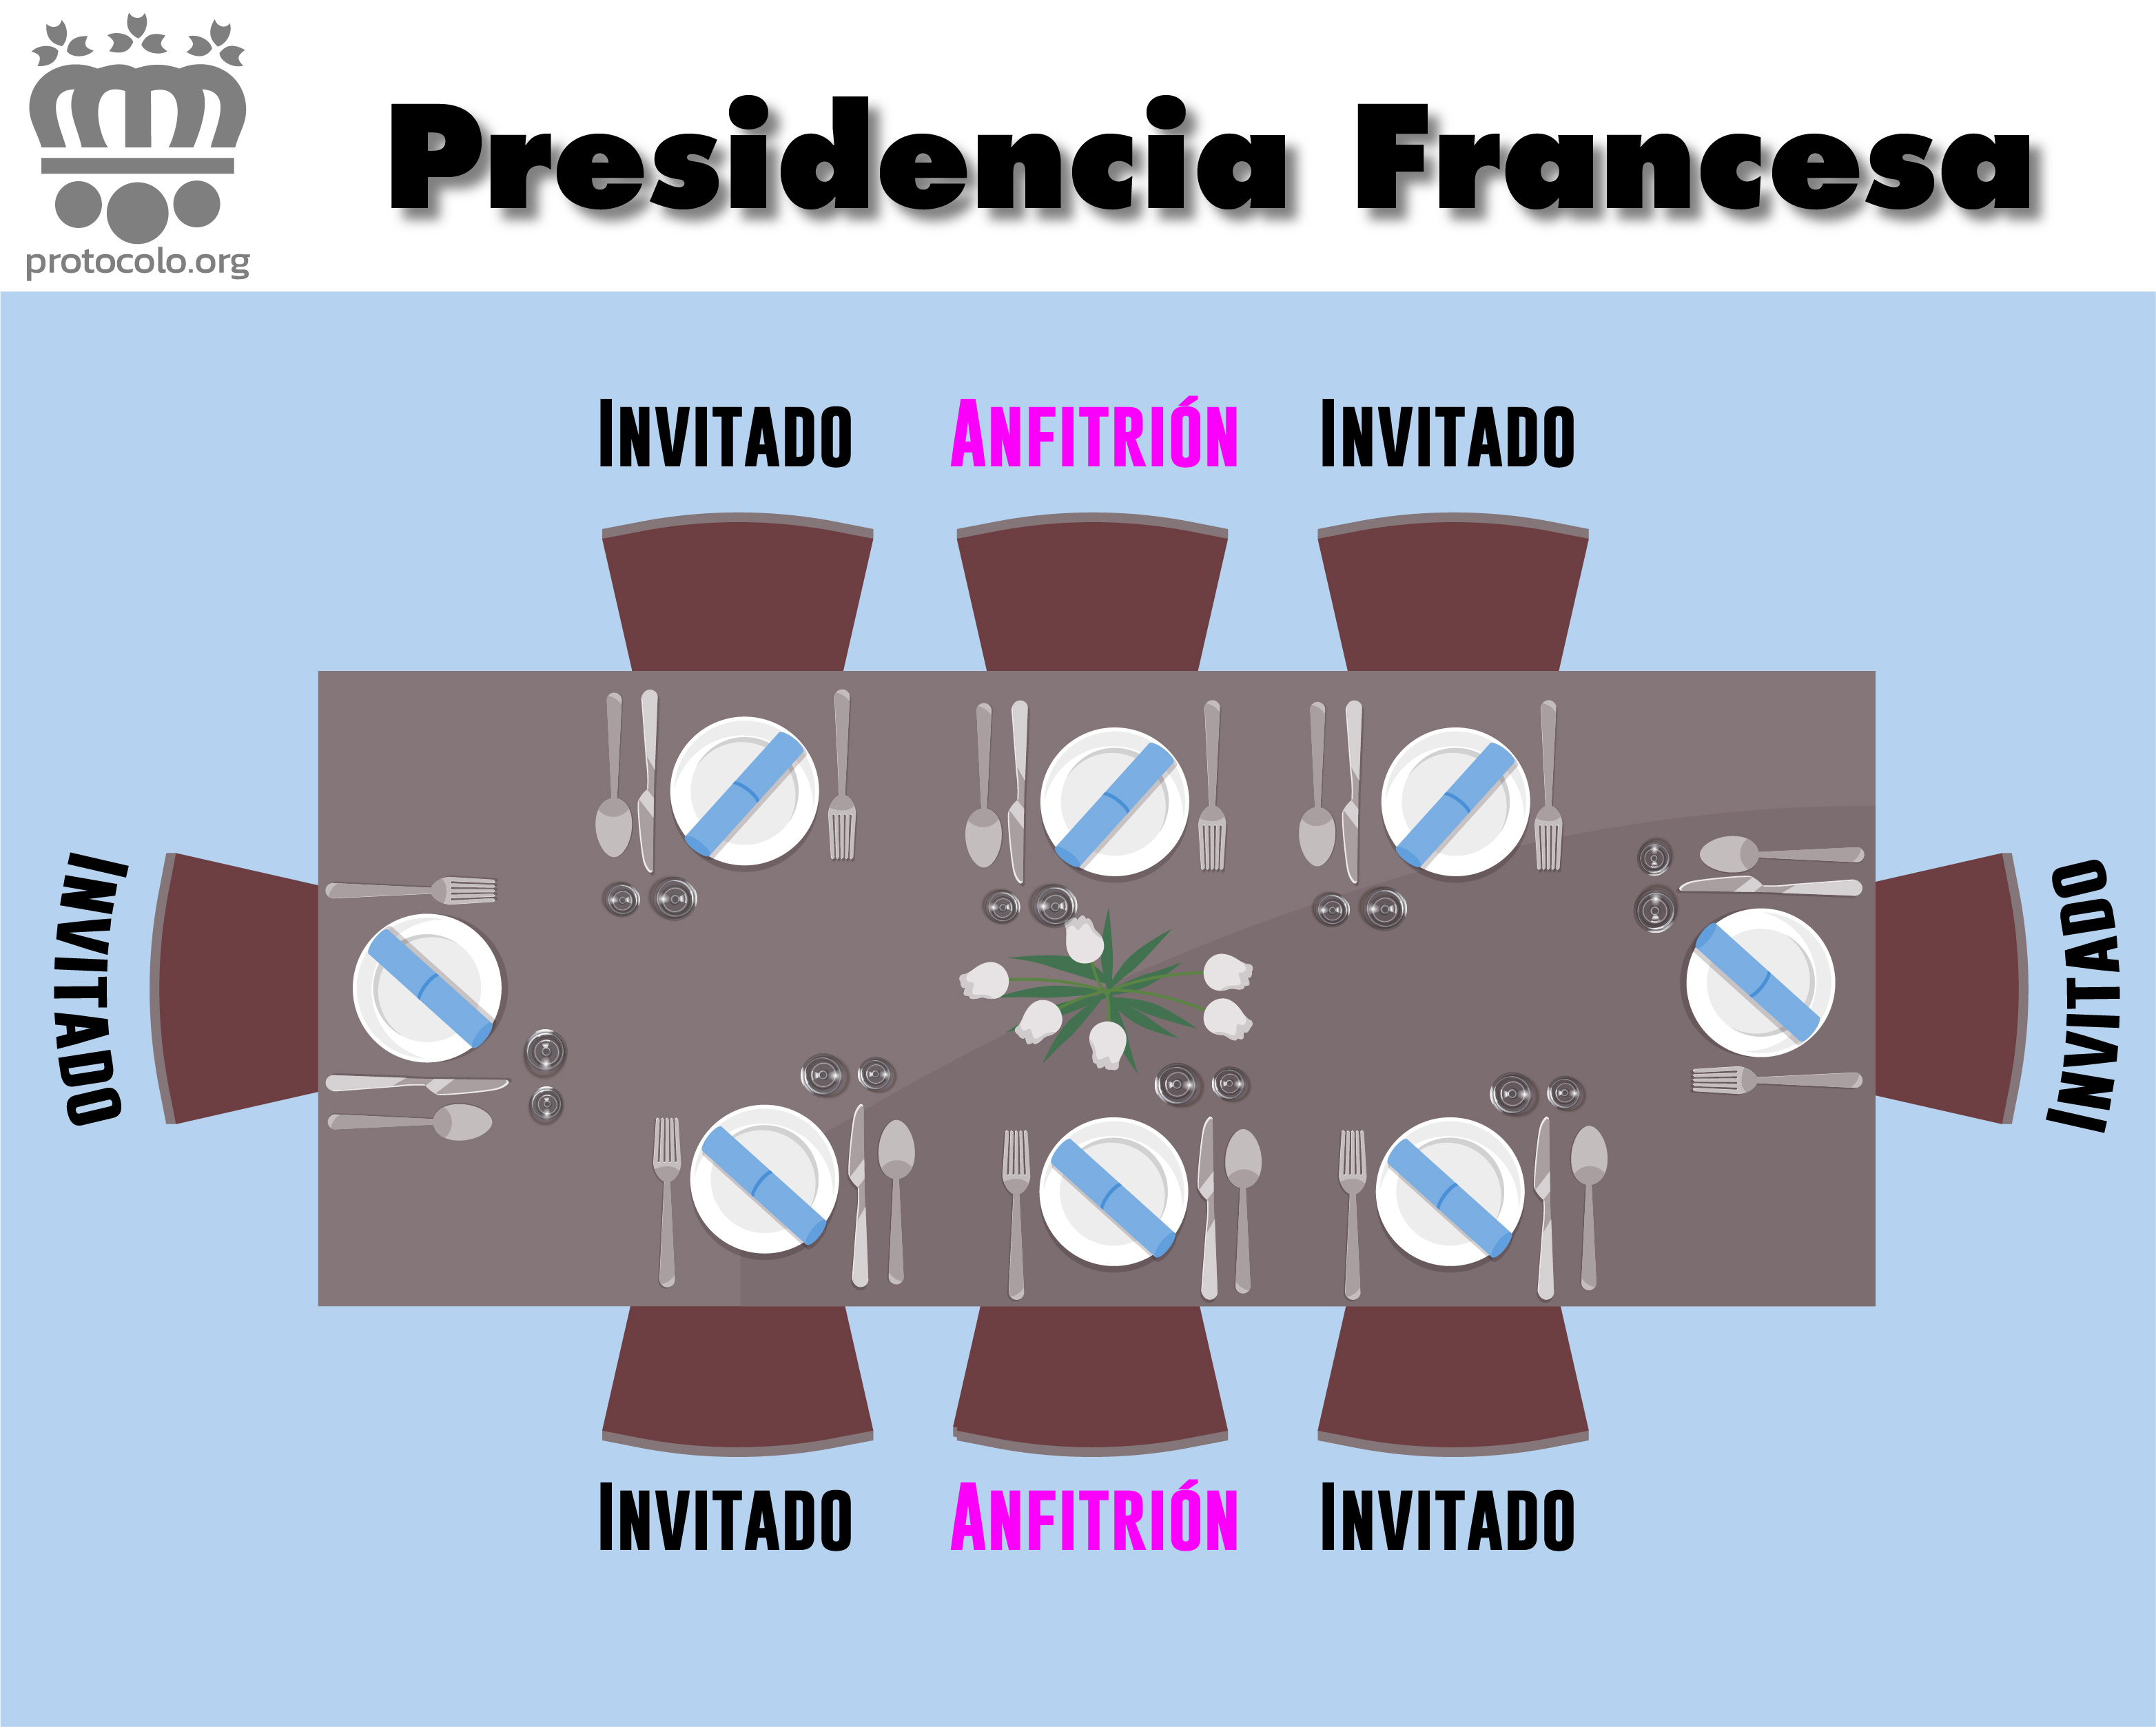 Sistema de presidencia Francés